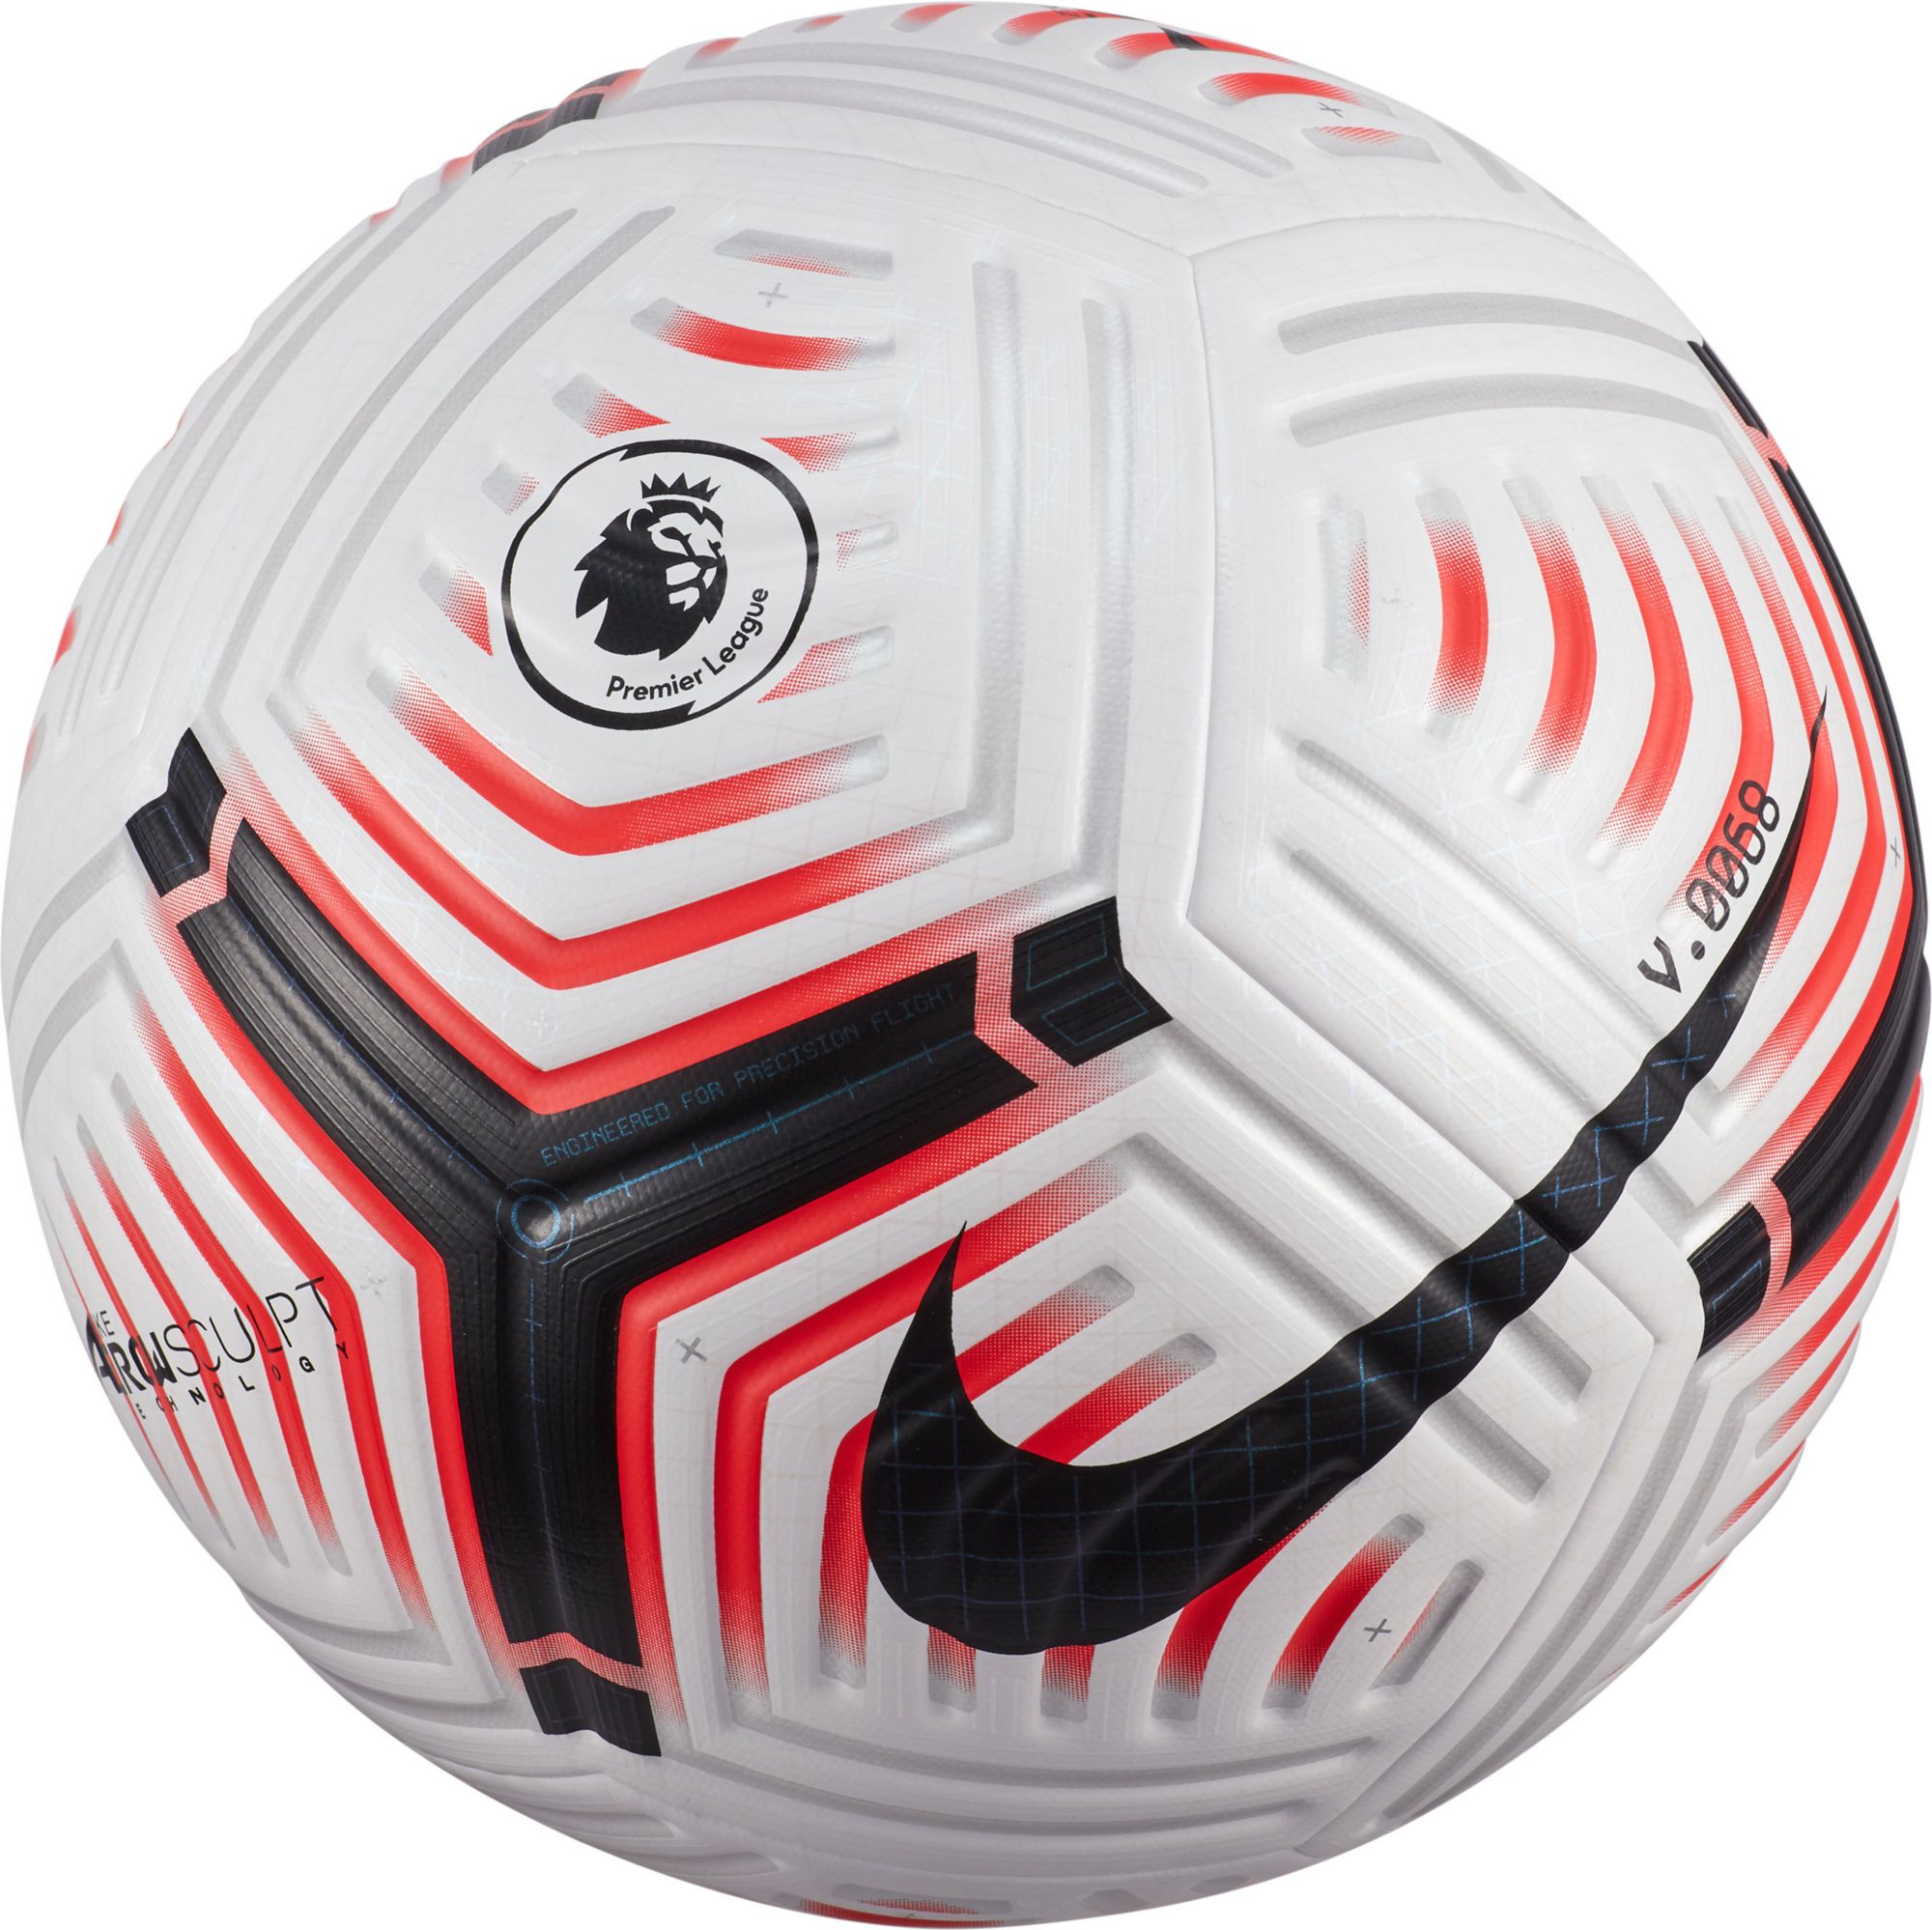 nike premier league soccer ball size 5